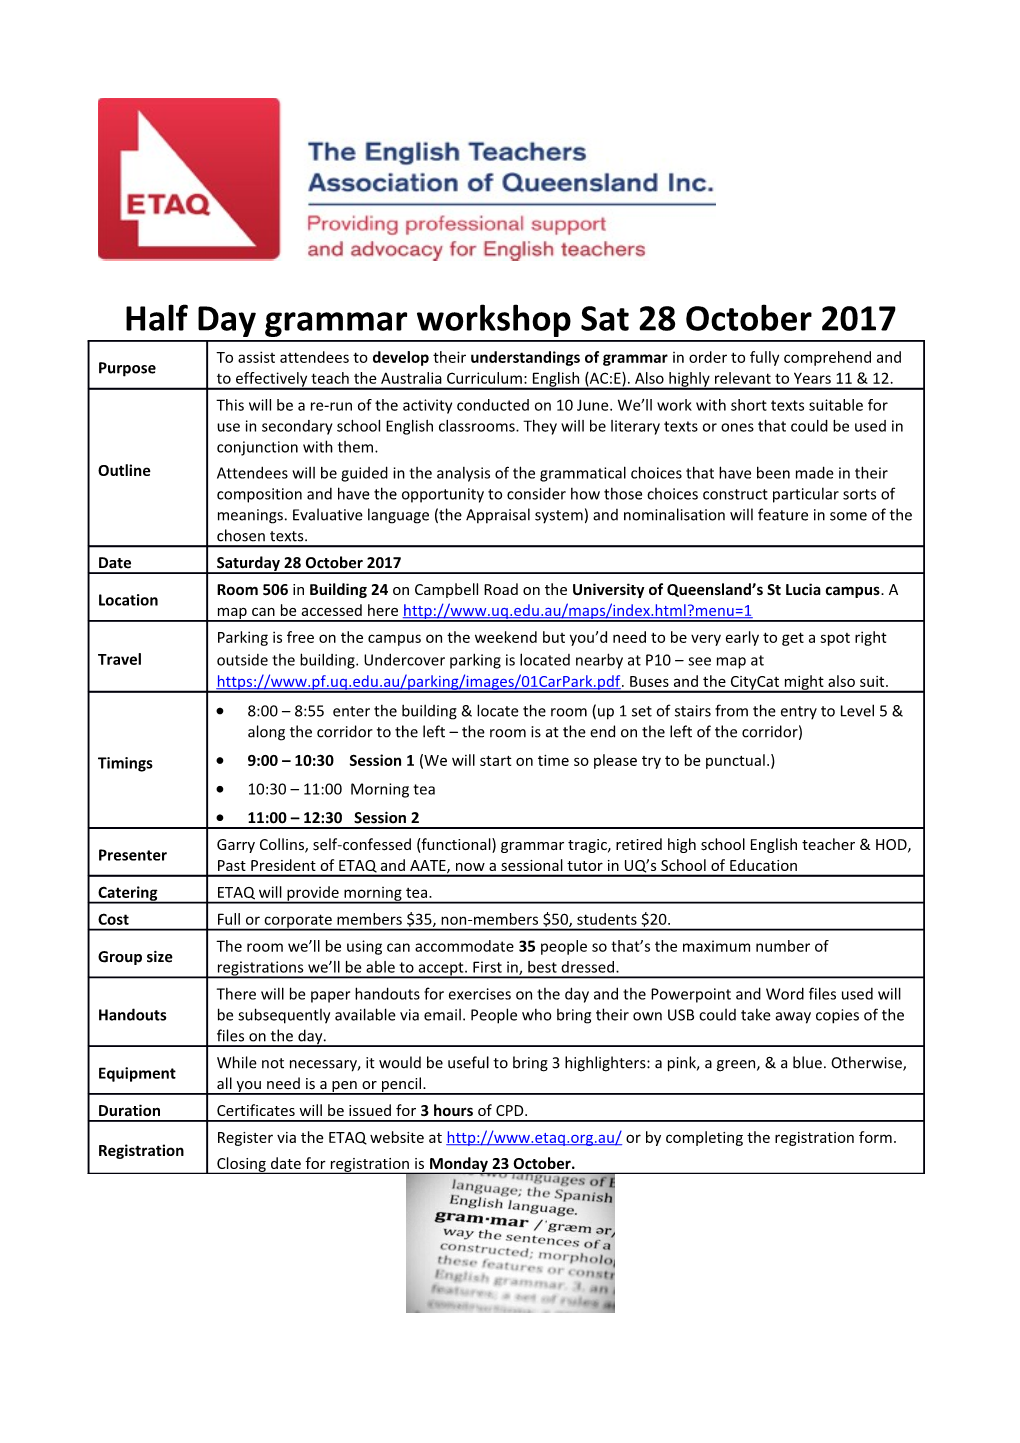 Half Day Grammar Workshop Sat 28October 2017